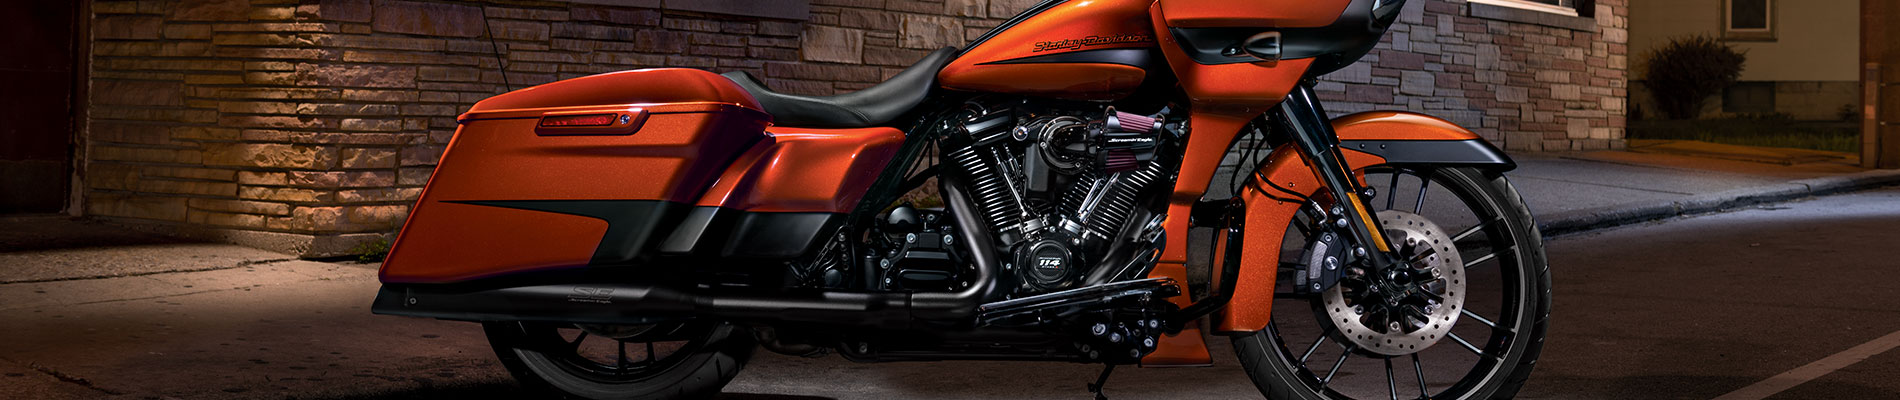 Rider Rewards at Mike Bruno's Northshore Harley-Davidson